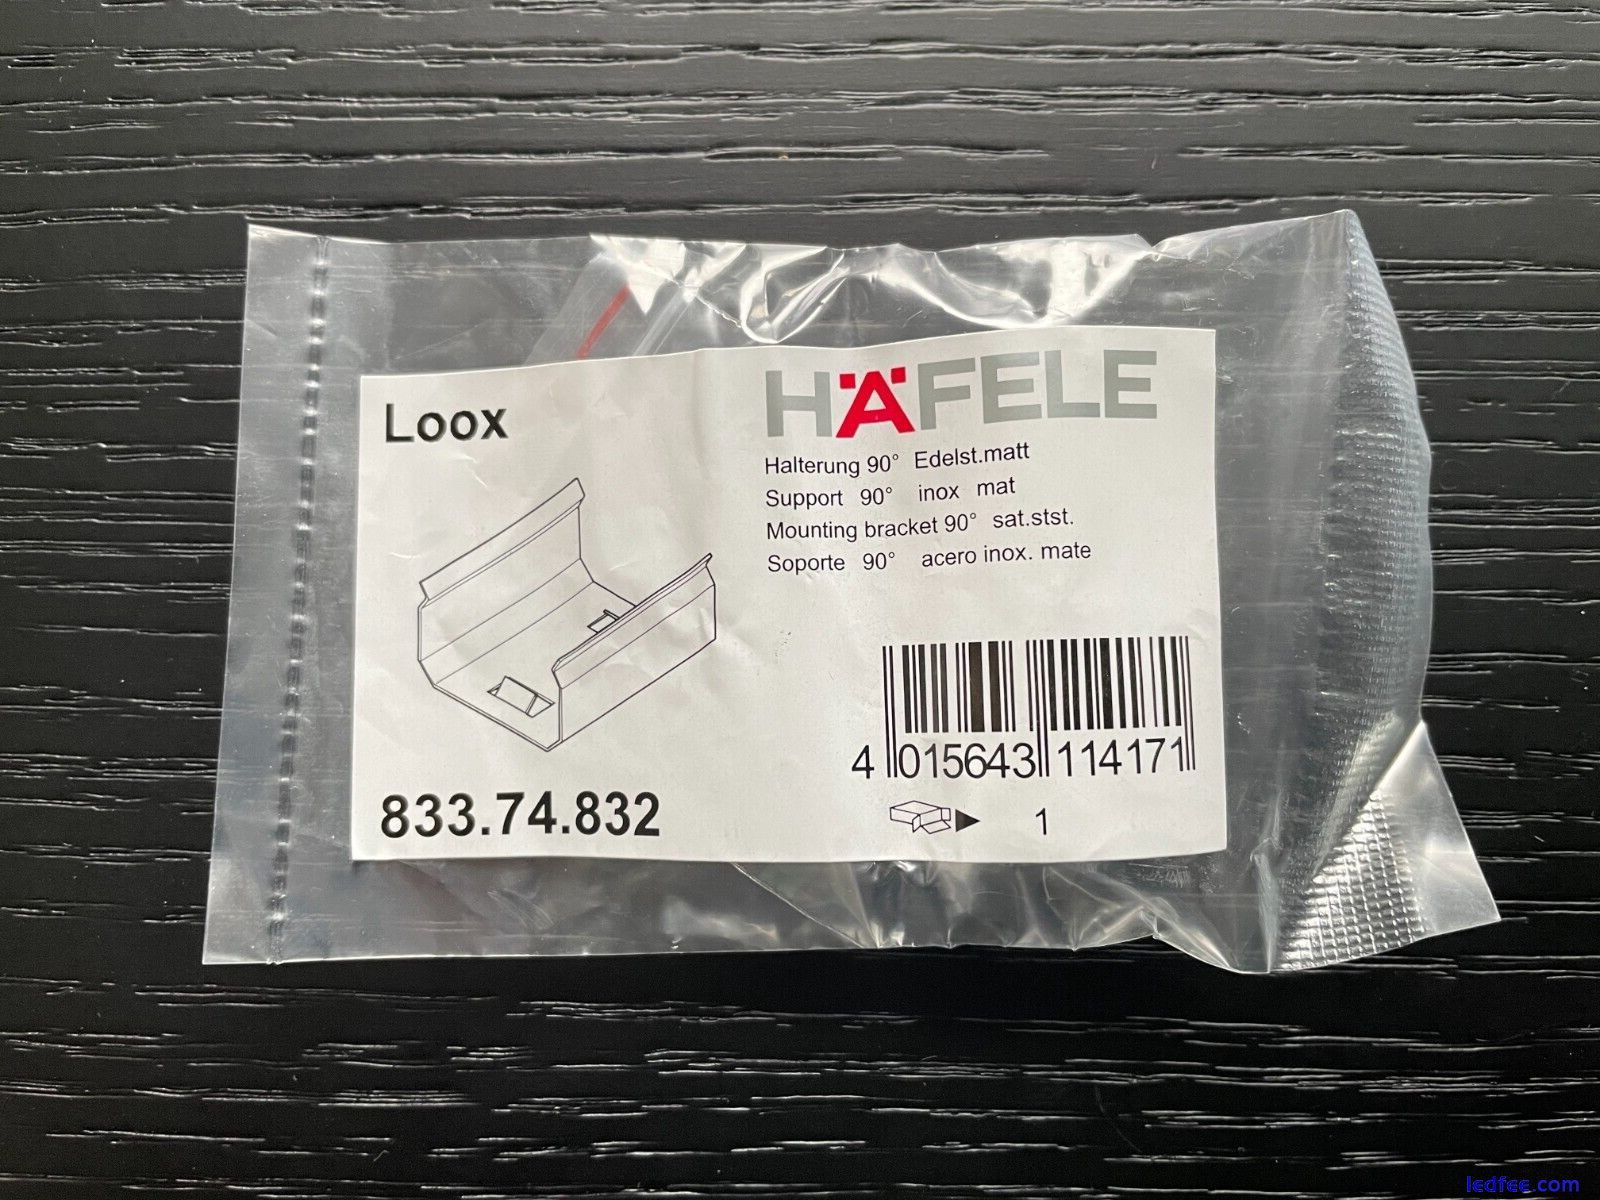 Hafele Mounting bracket for Hafele LOOX LED Strip (833.74.832) 0 